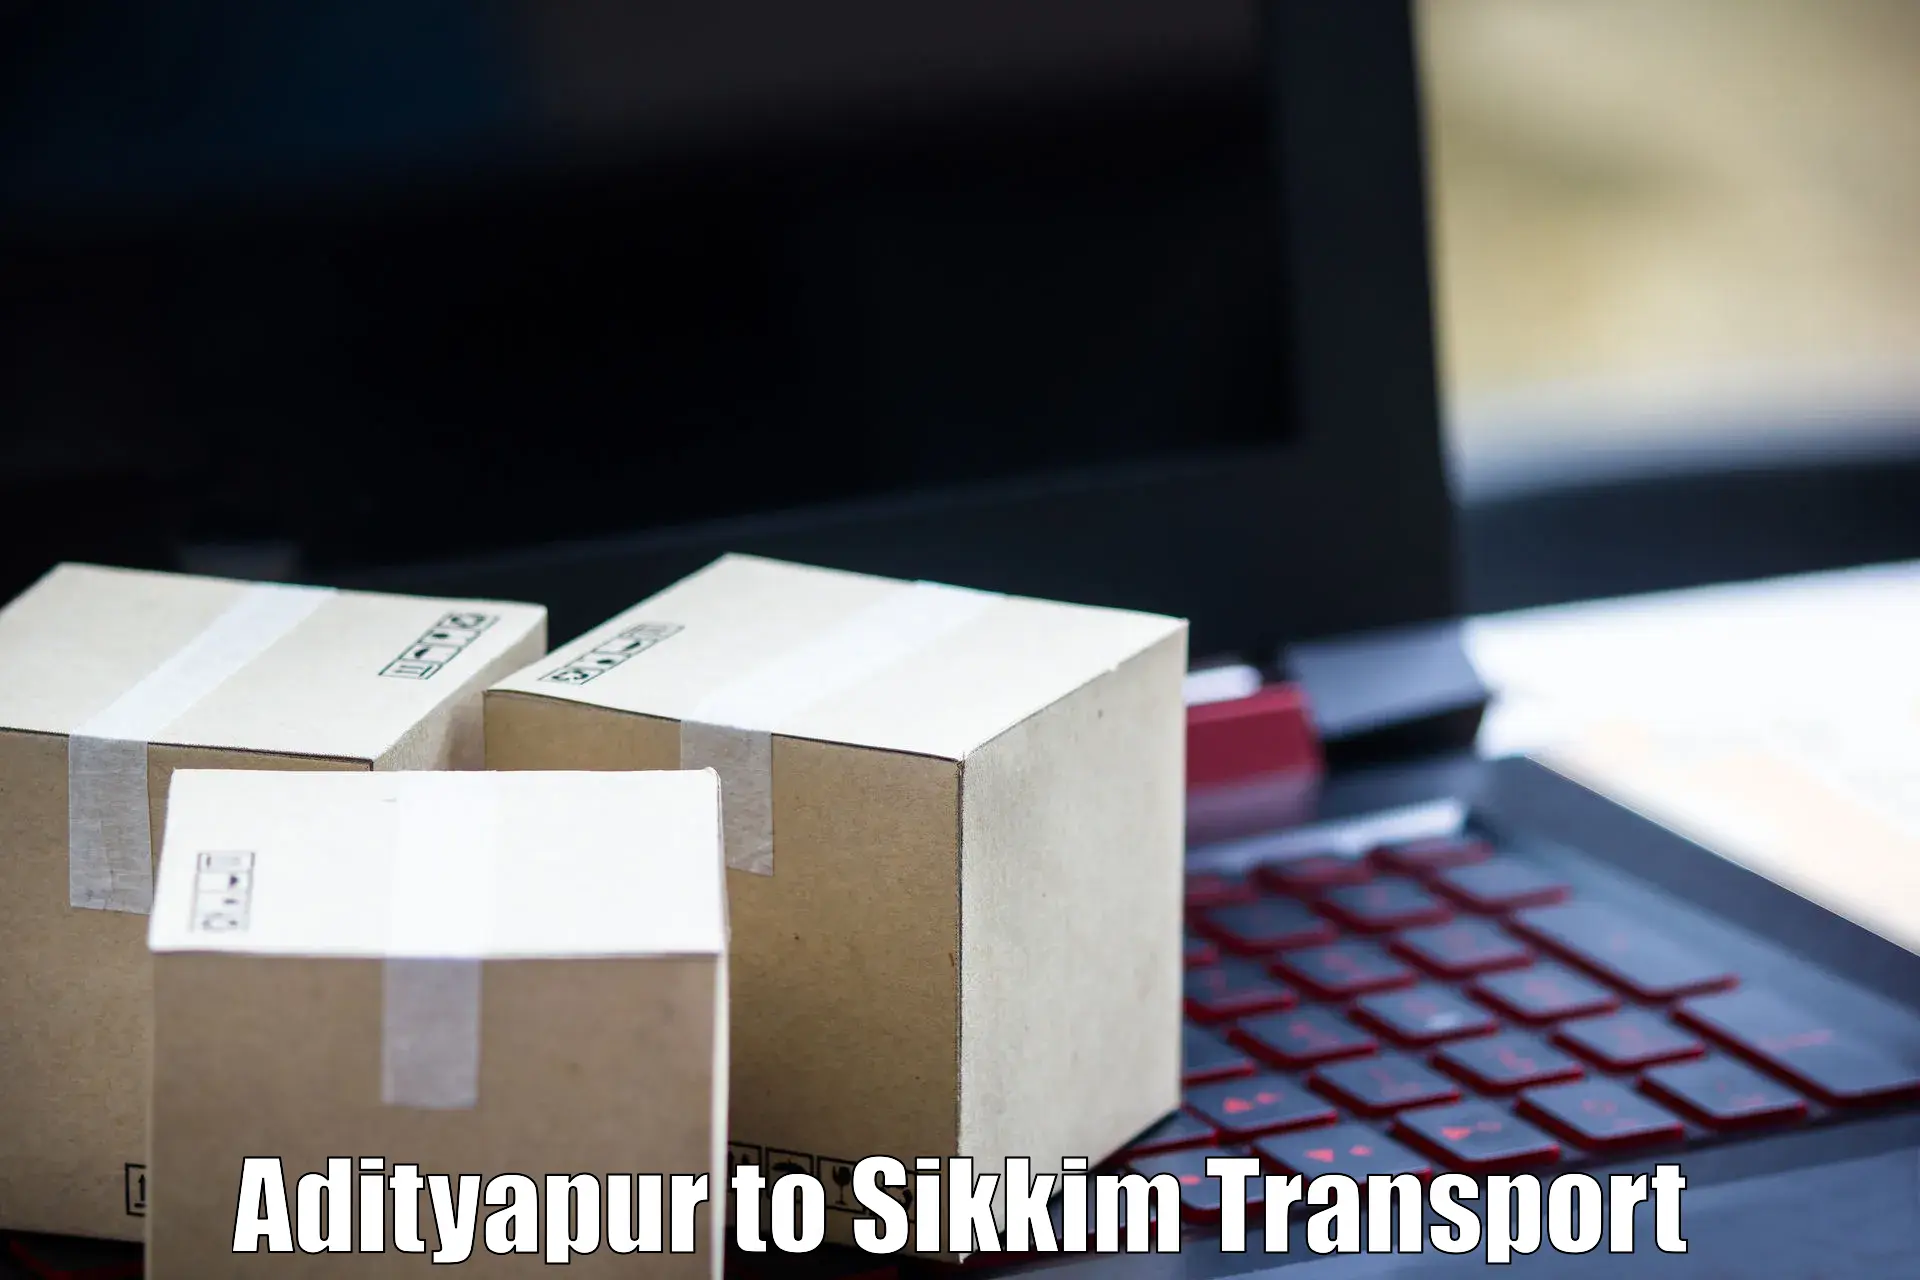 Shipping partner Adityapur to East Sikkim